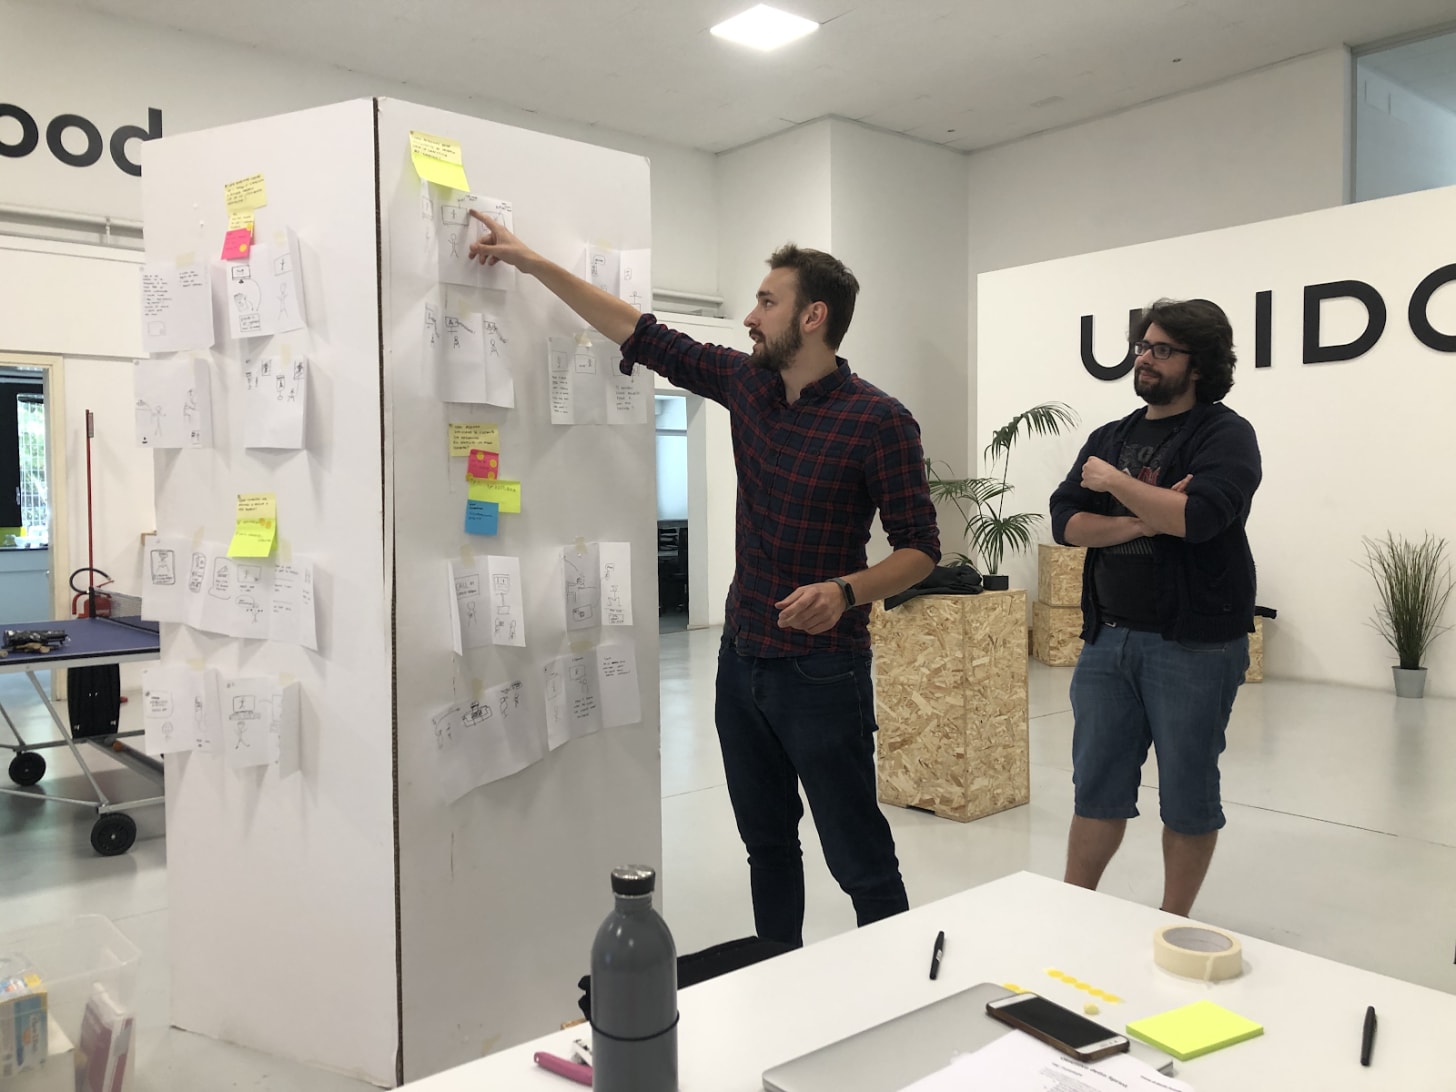 Uqido team planning the prototype